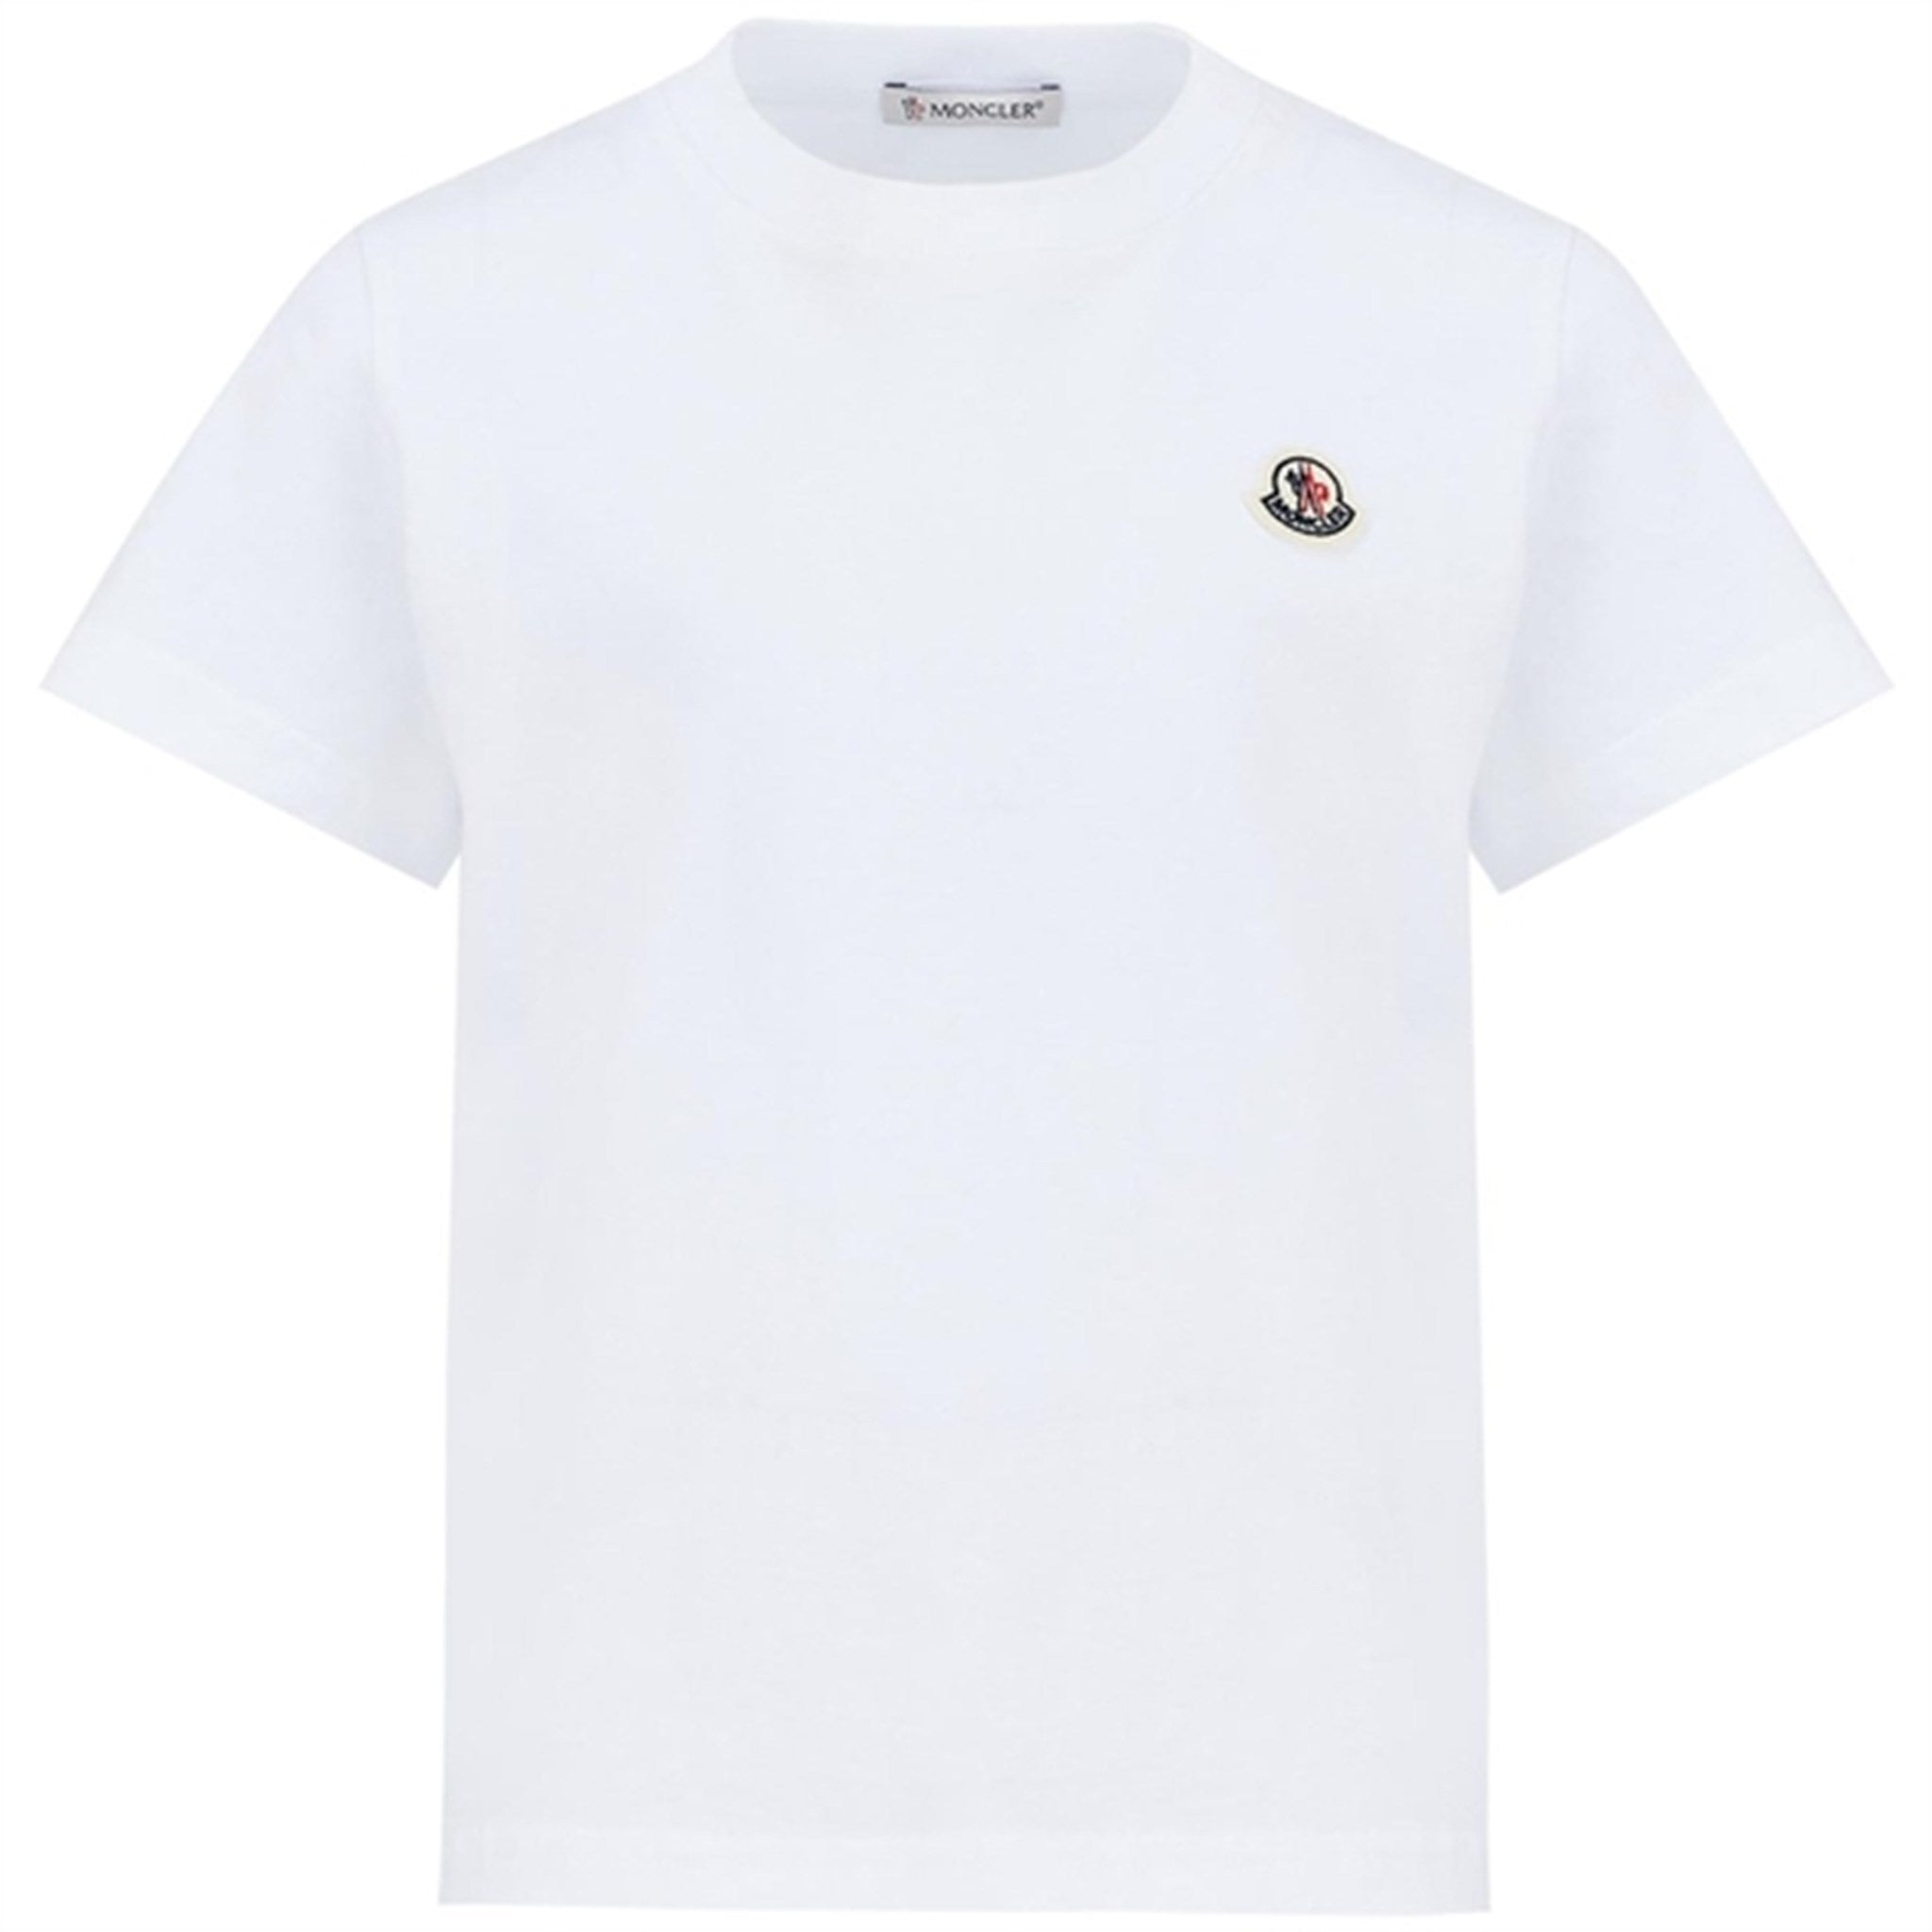 Moncler T-Shirt White